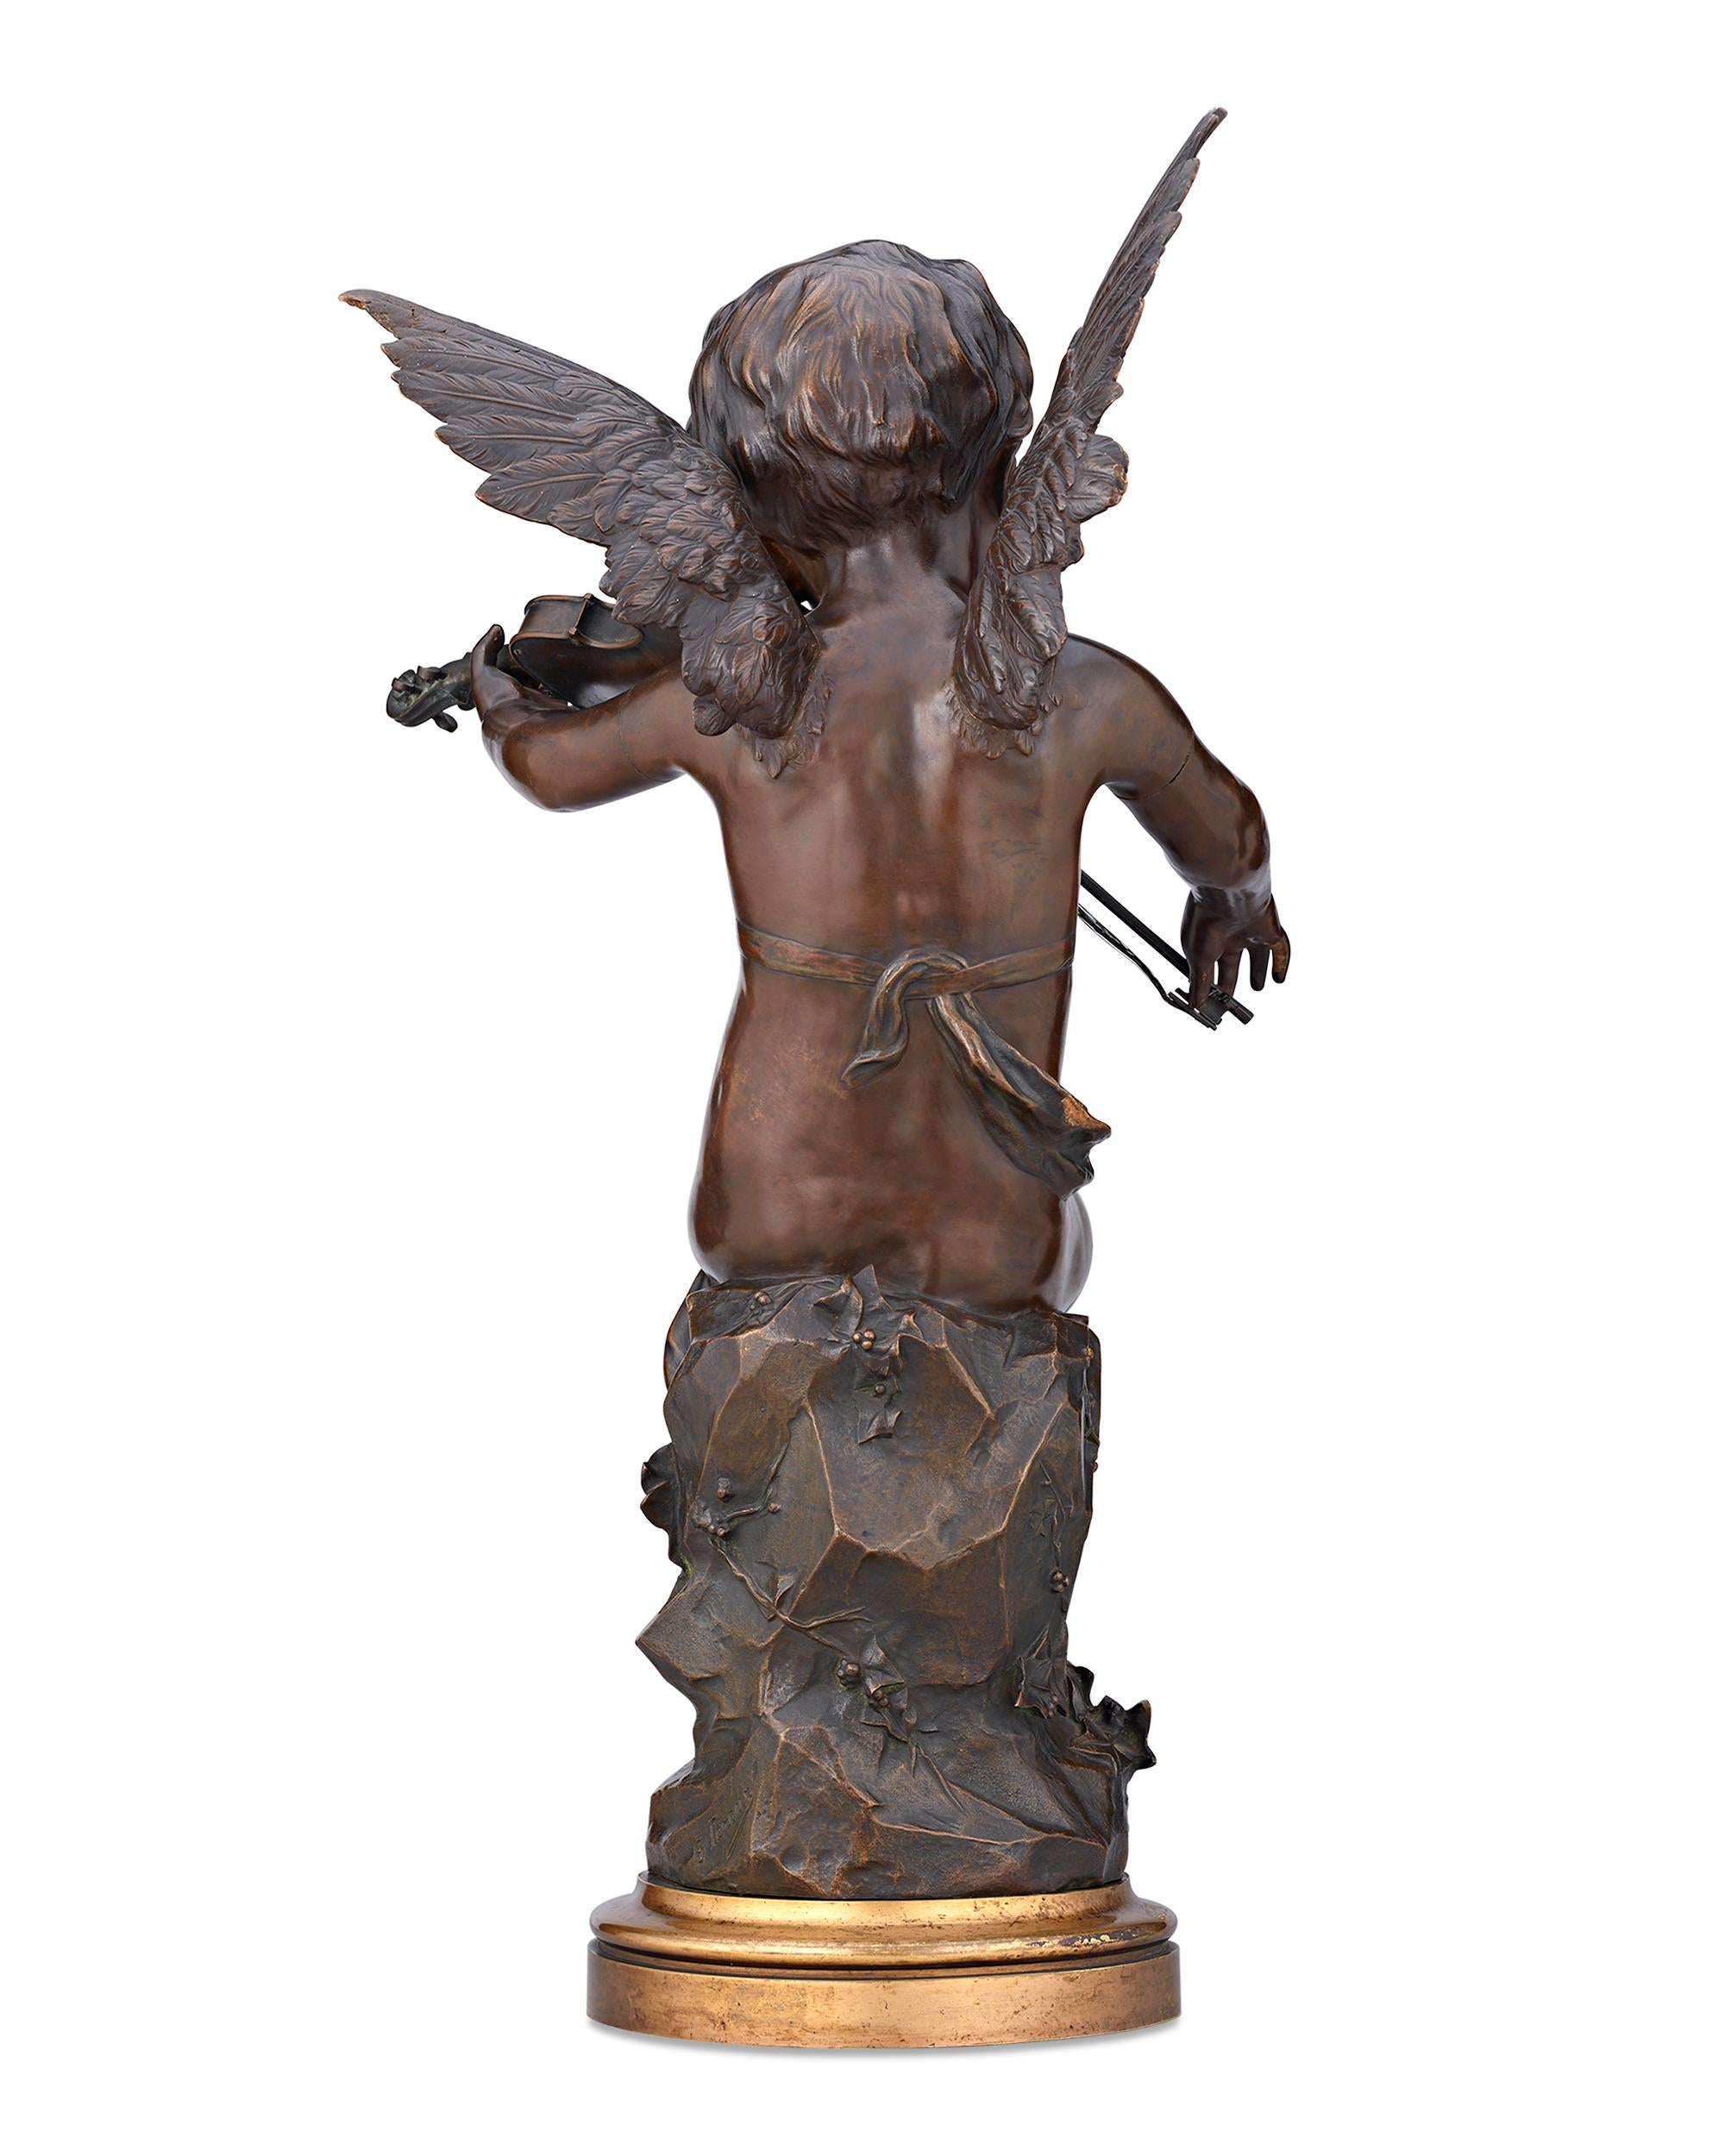 Ange Jouant du Violin - Other Art Style Sculpture by Gaston Leroux